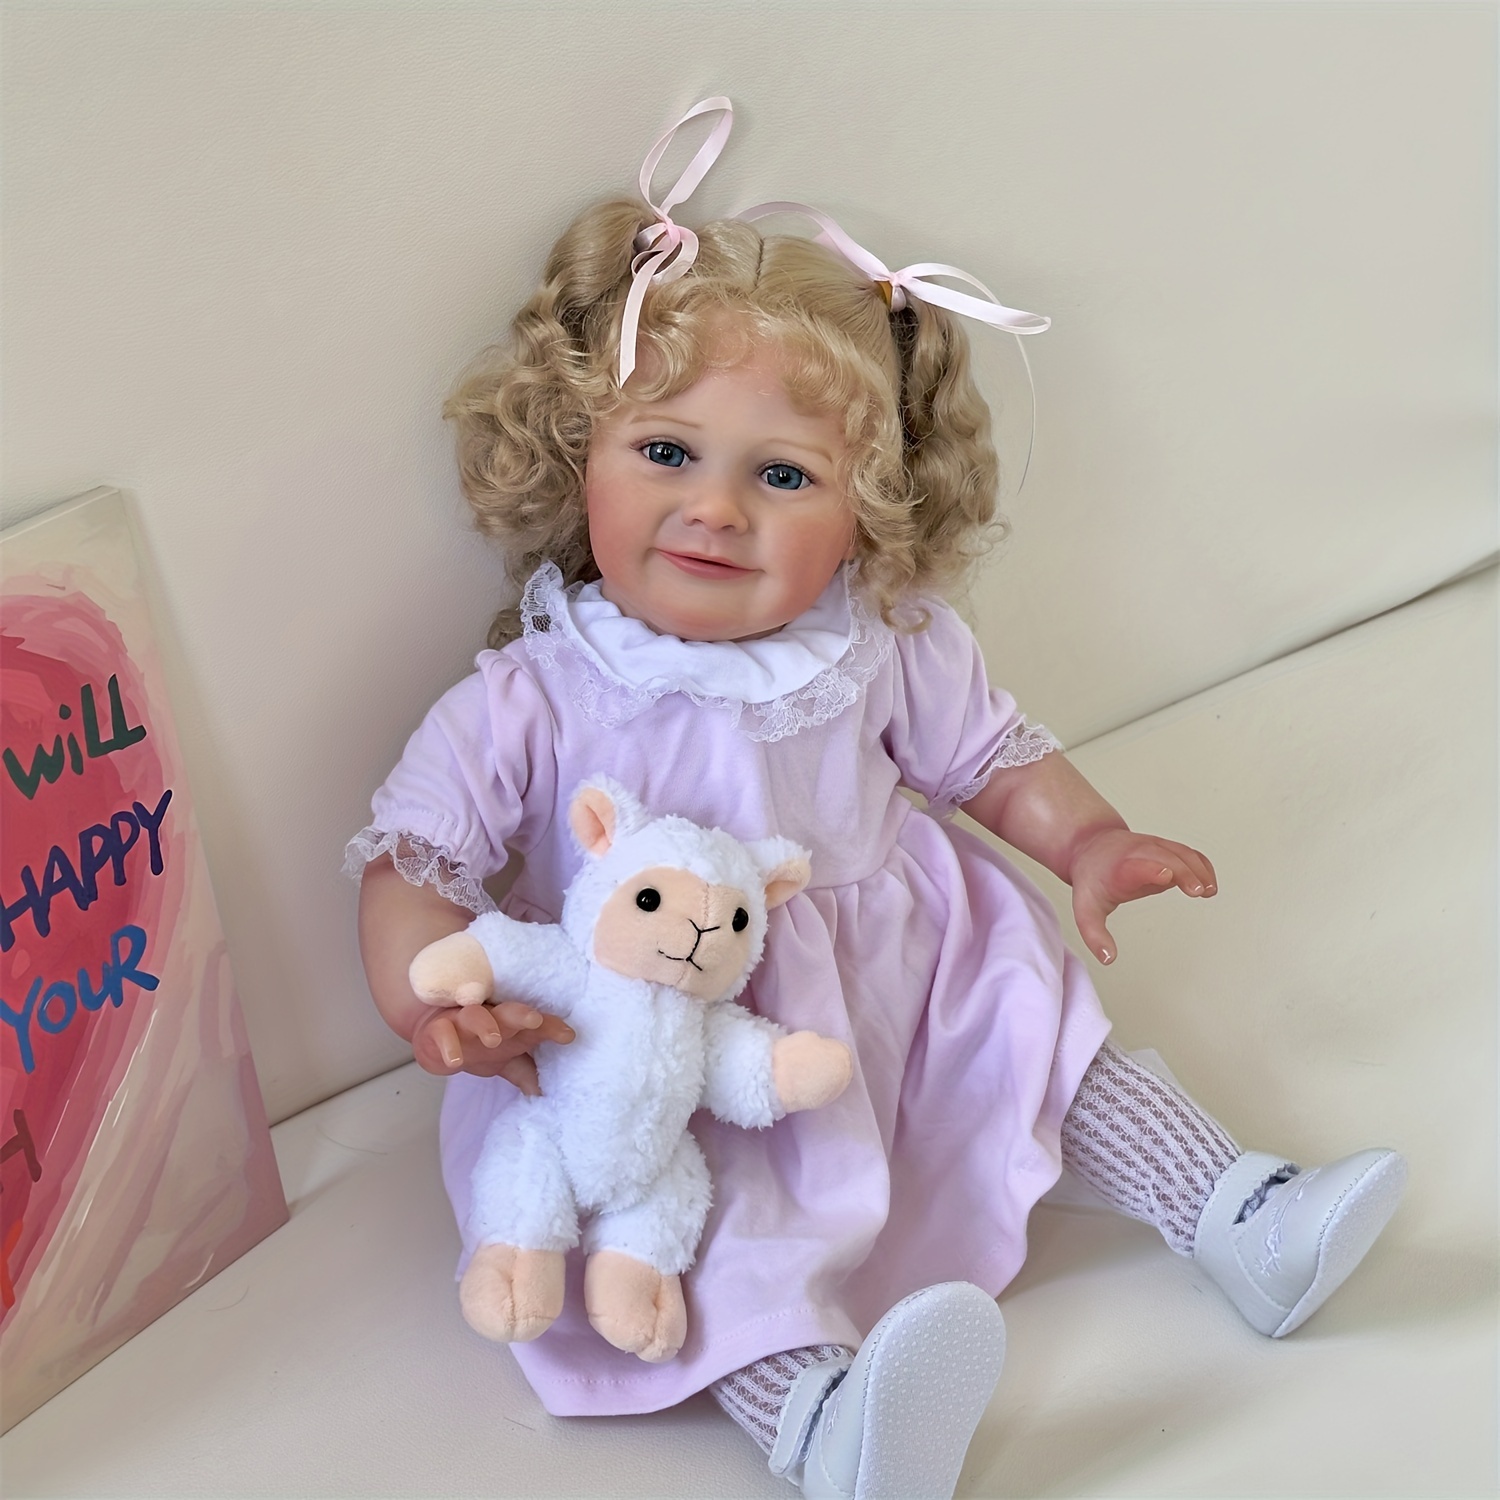 iCradle 60cm Soft Silicone Reborn Baby Doll Toy for, boneca bebe